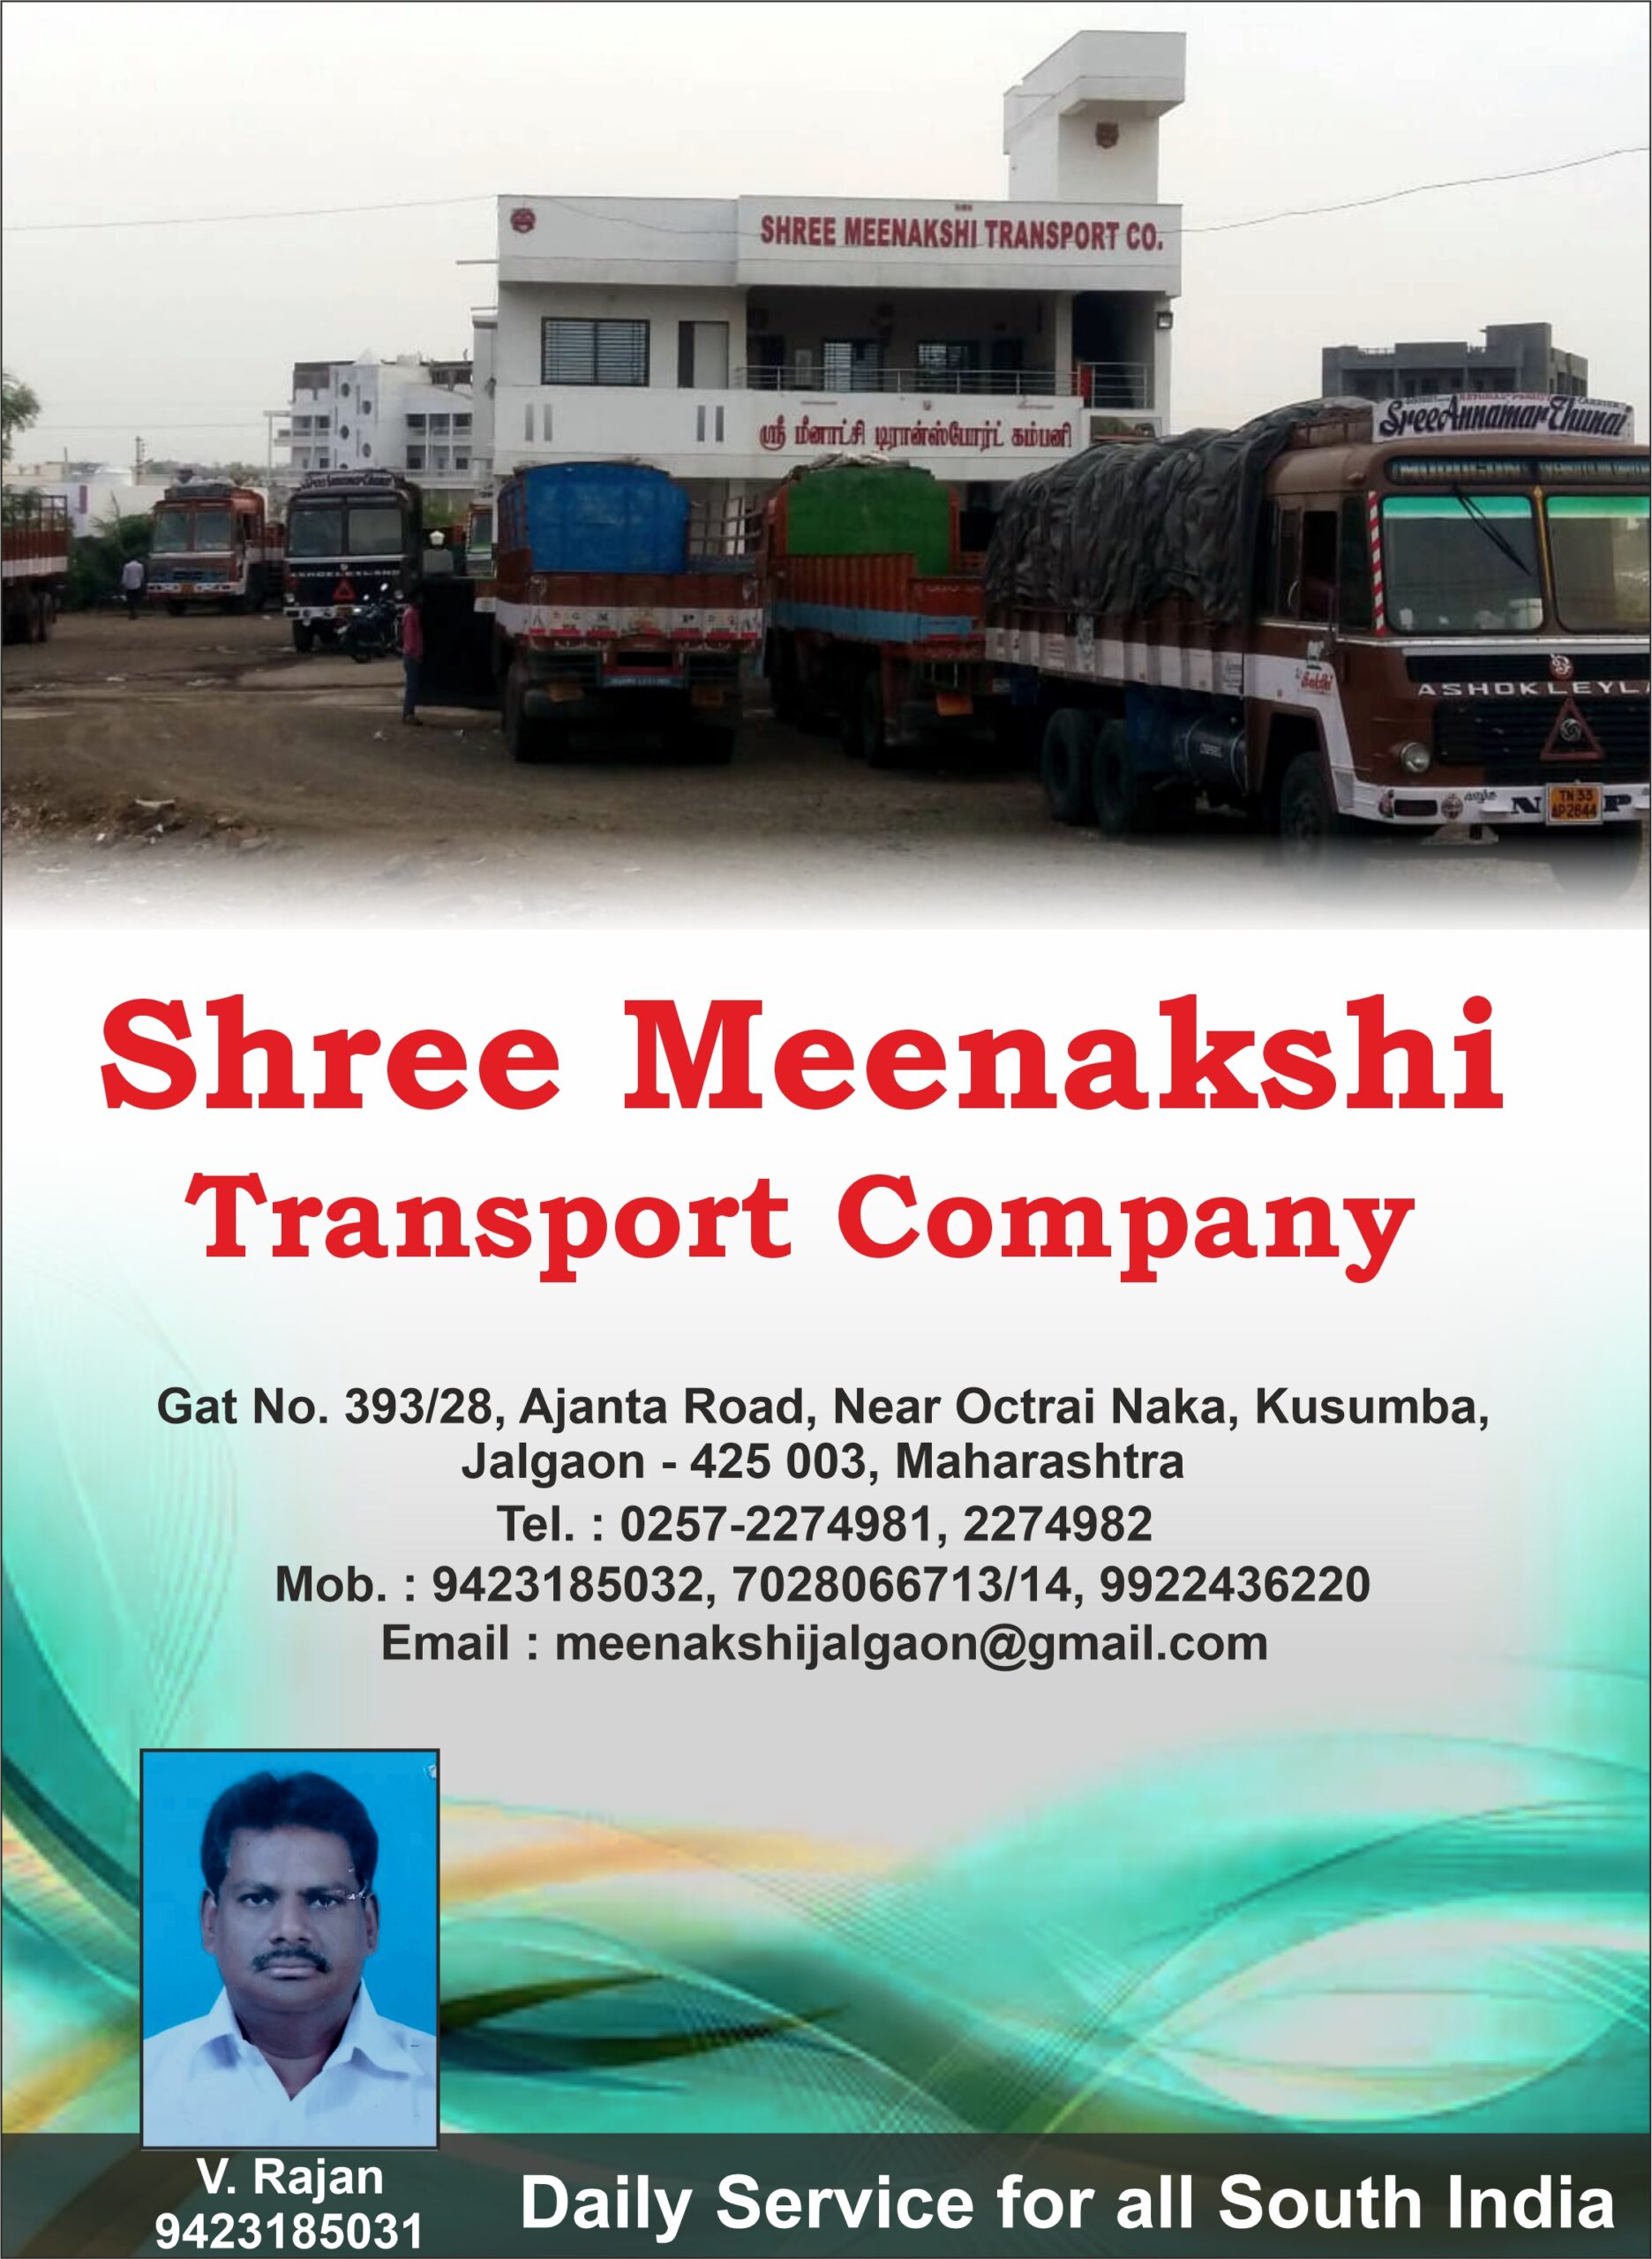 Shree Meenakshi Transport Compan